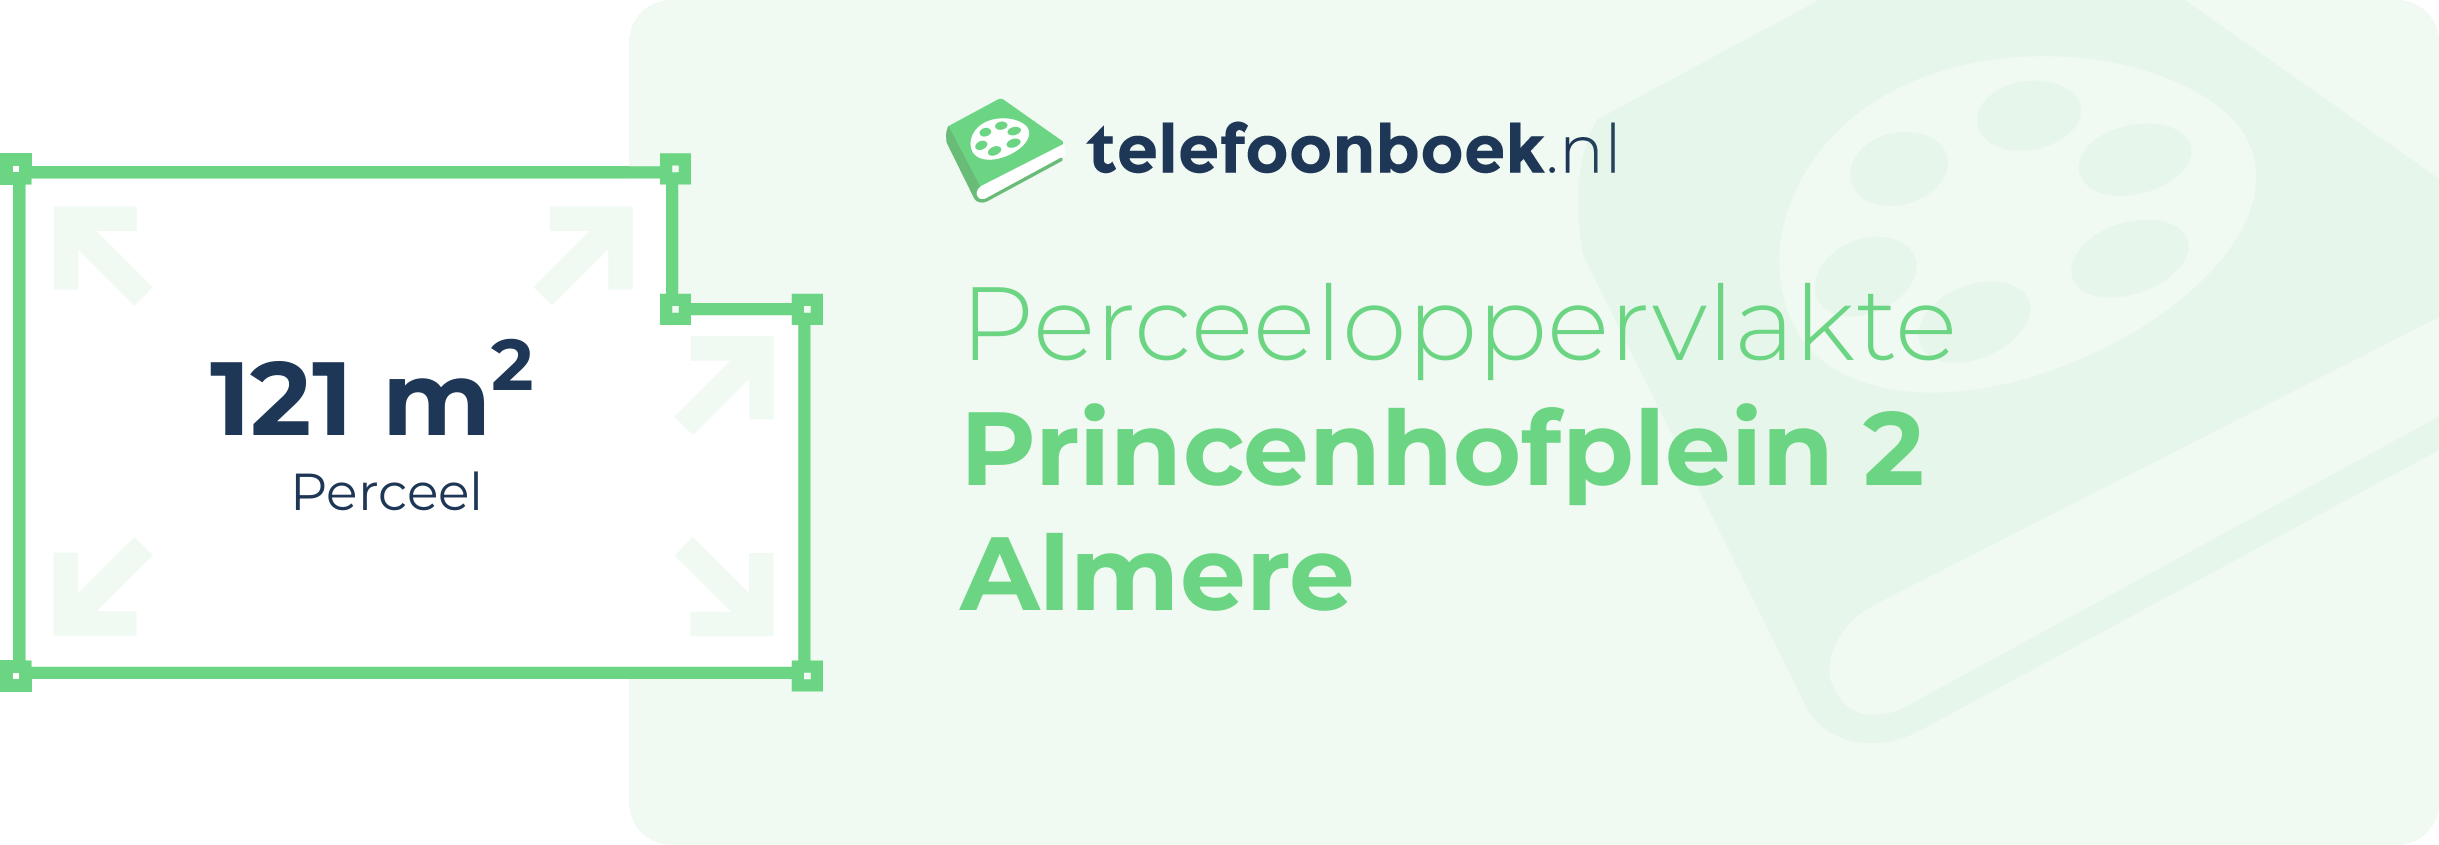 Perceeloppervlakte Princenhofplein 2 Almere